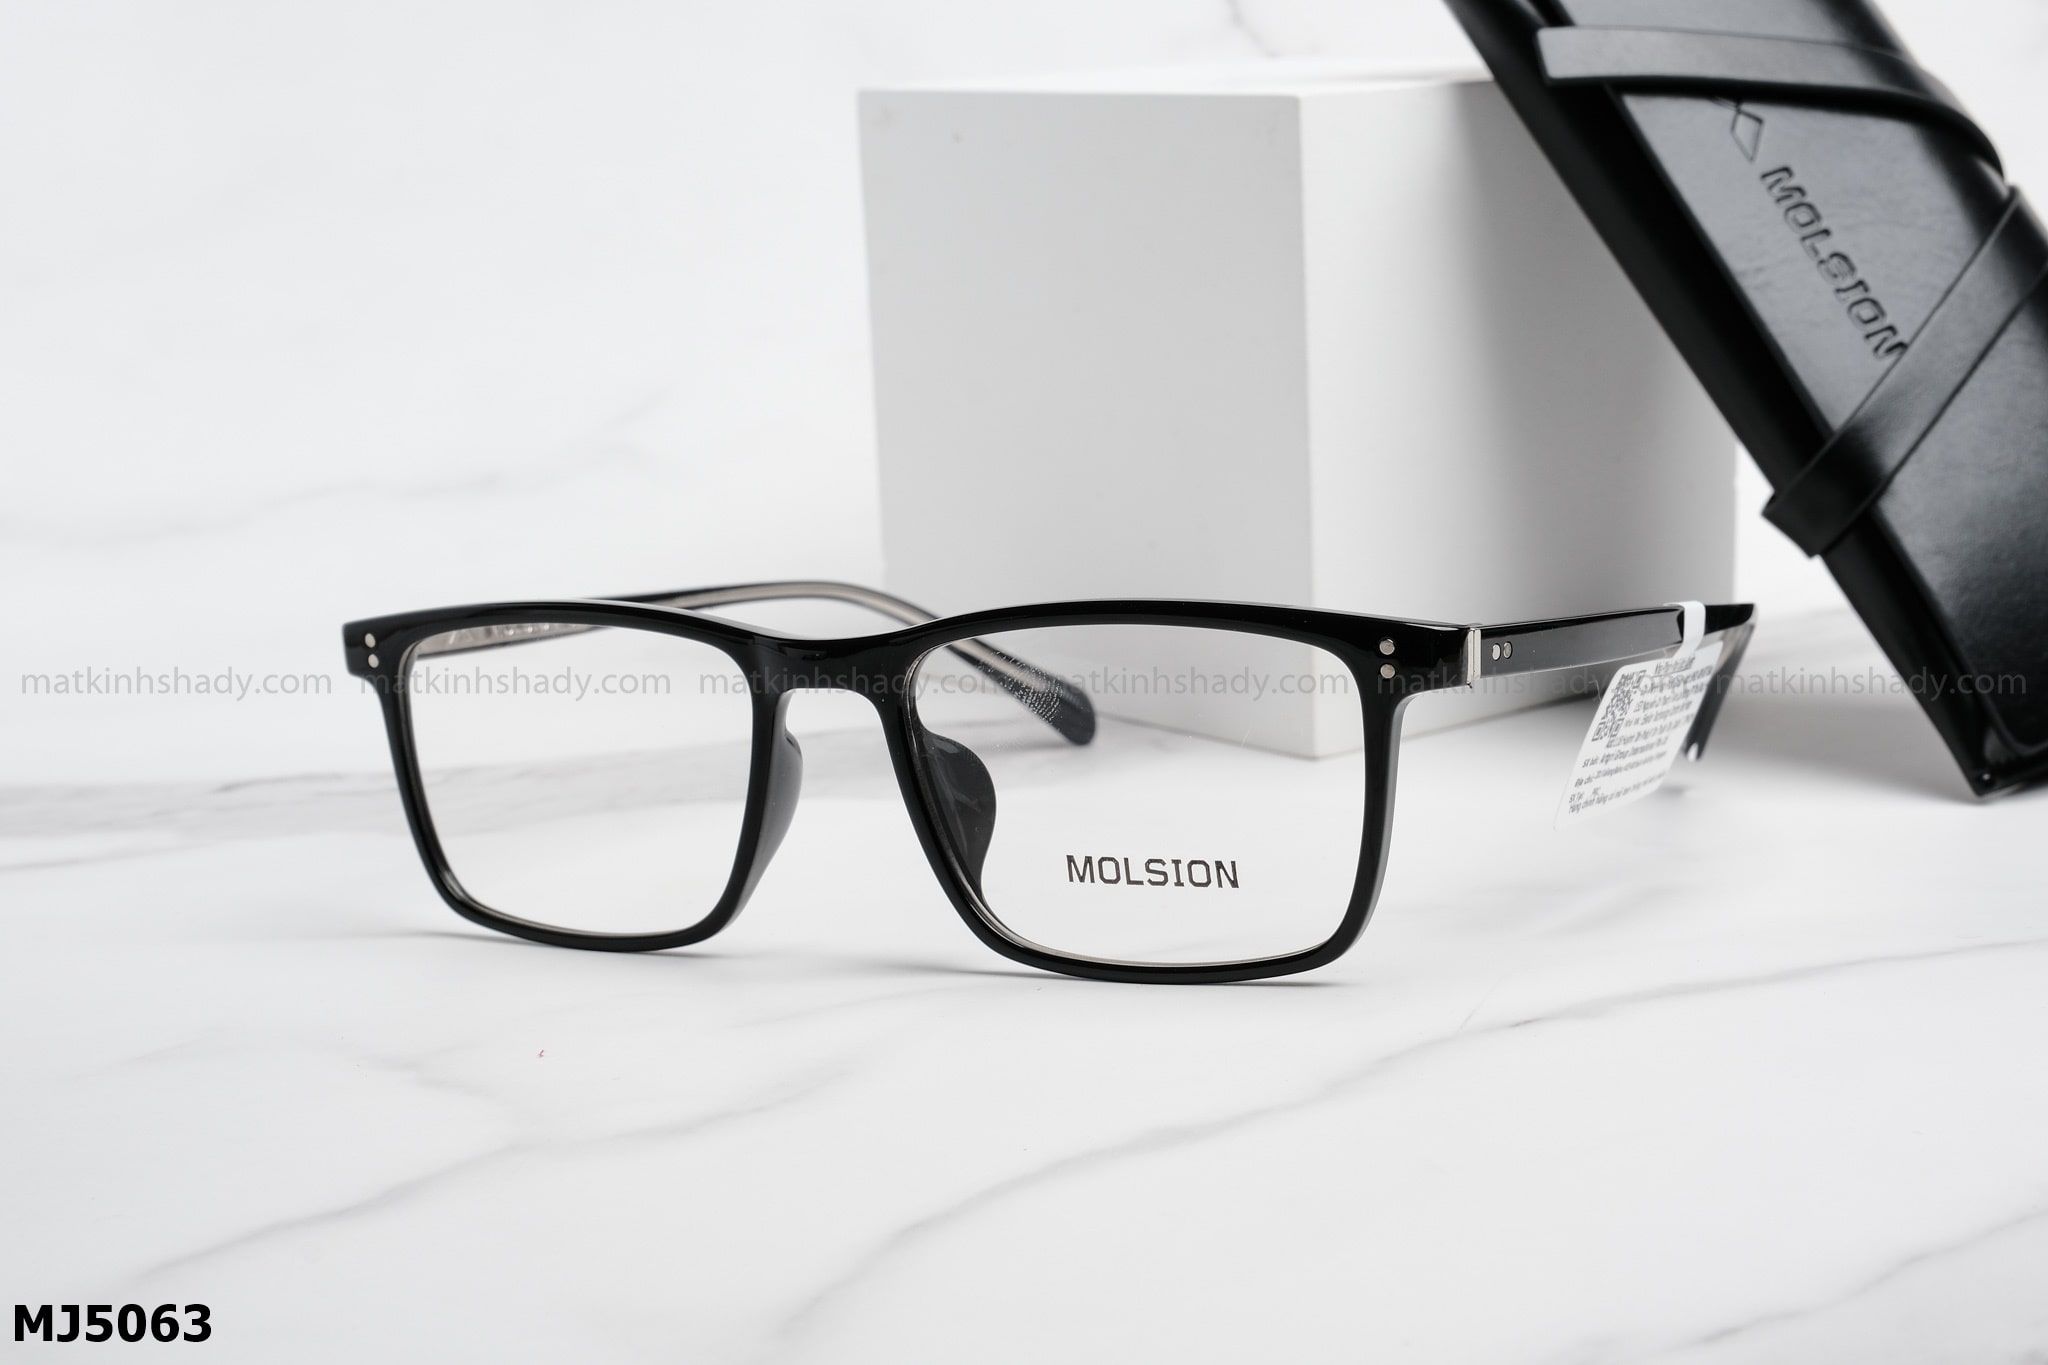  Molsion Eyewear - Glasses - MJ5063 